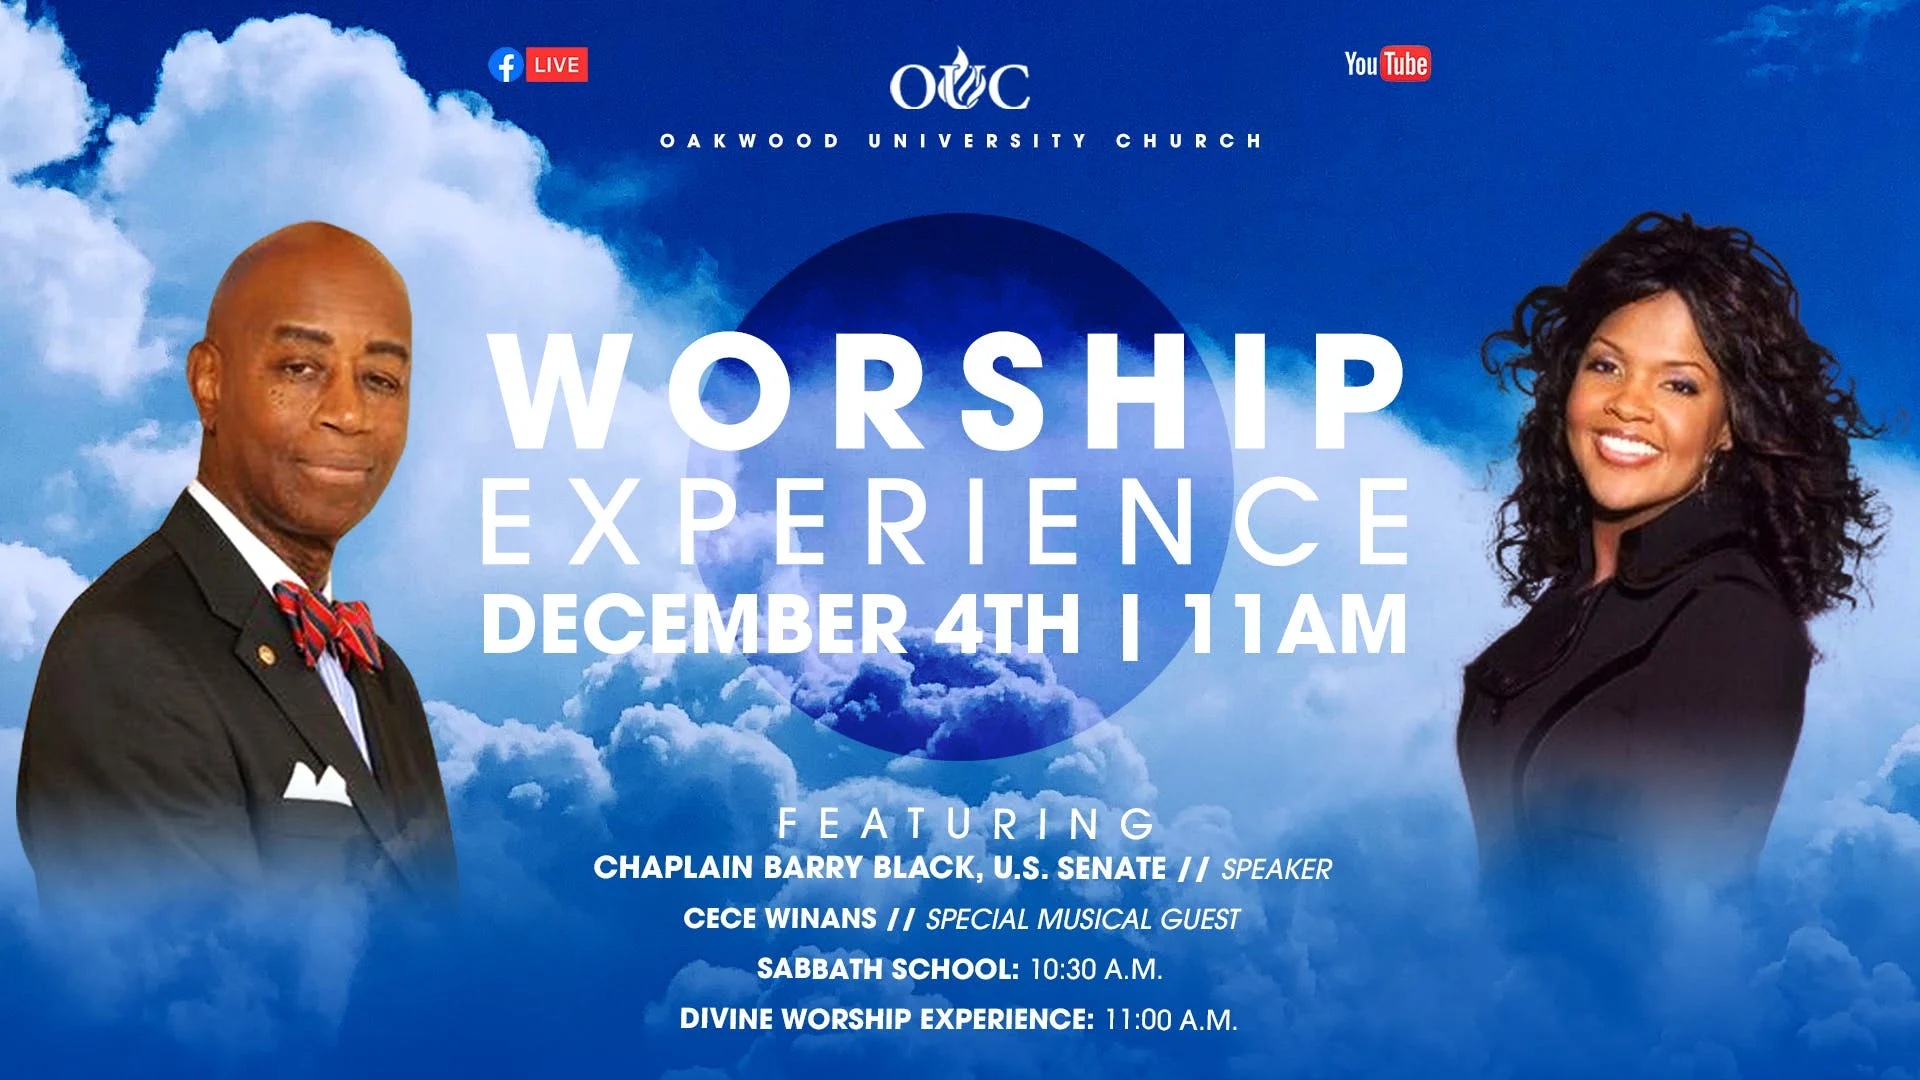 Oakwood University Church Worship Experience